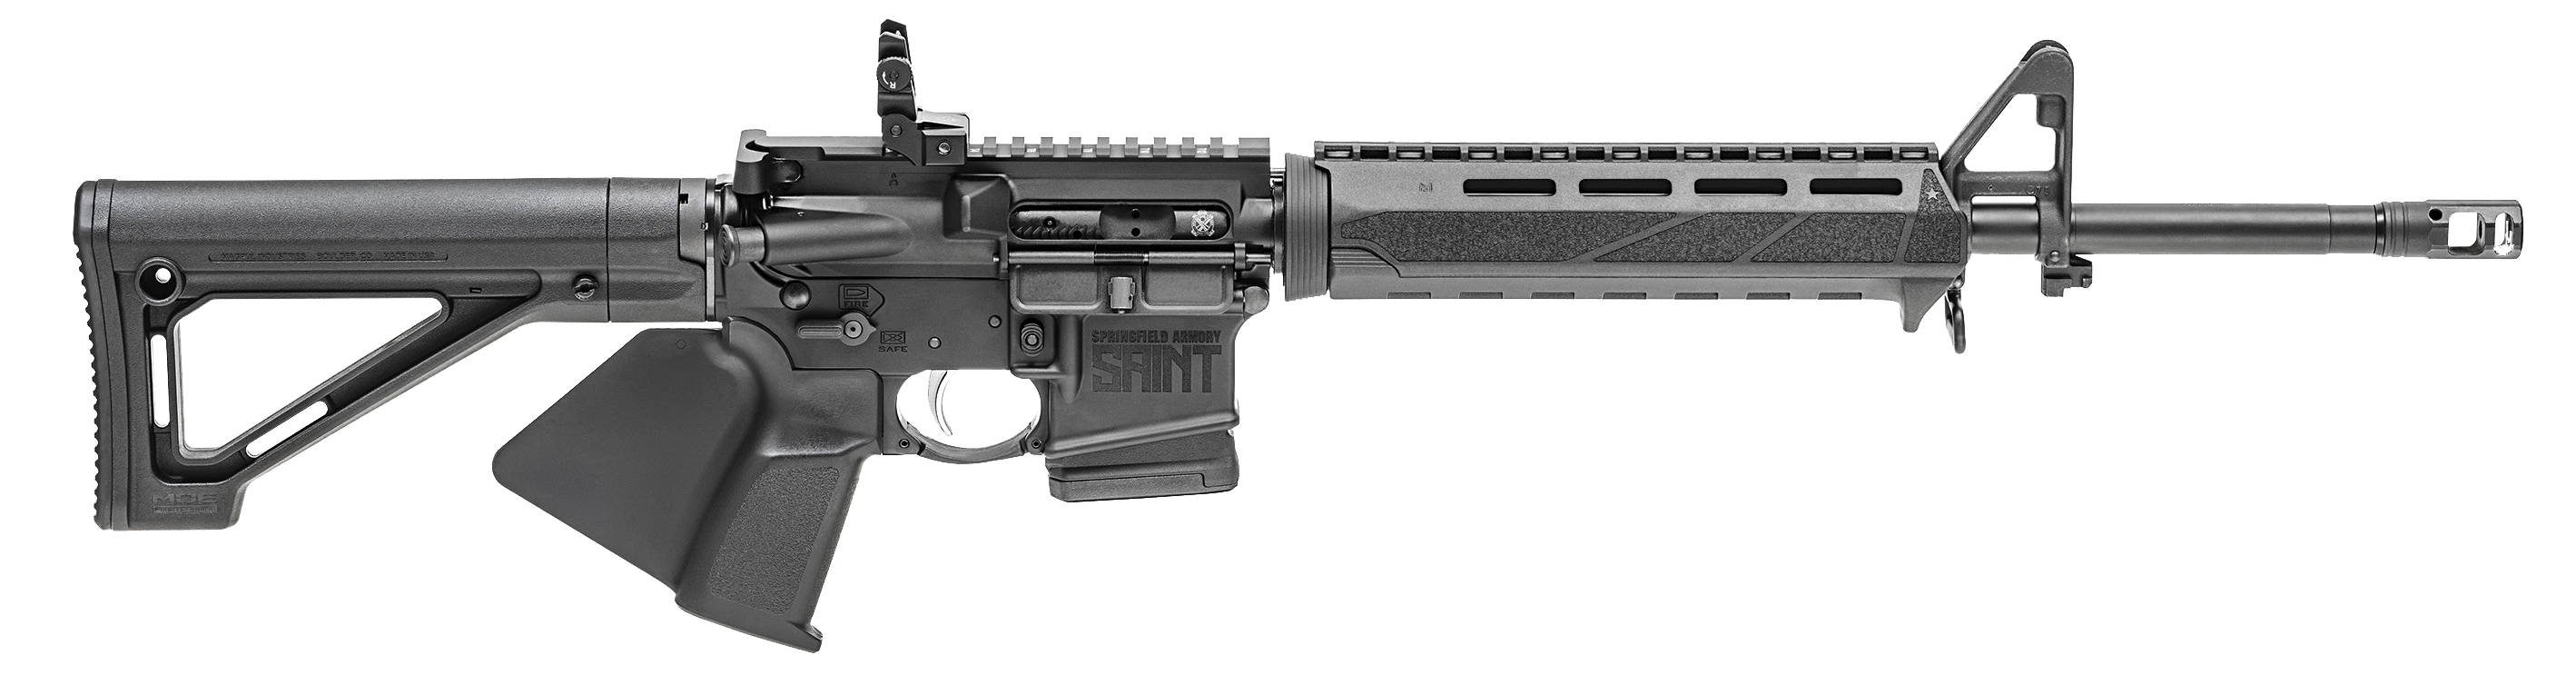 SPR SAINT 556 16 A2 MLOK CA 10 - Long Guns